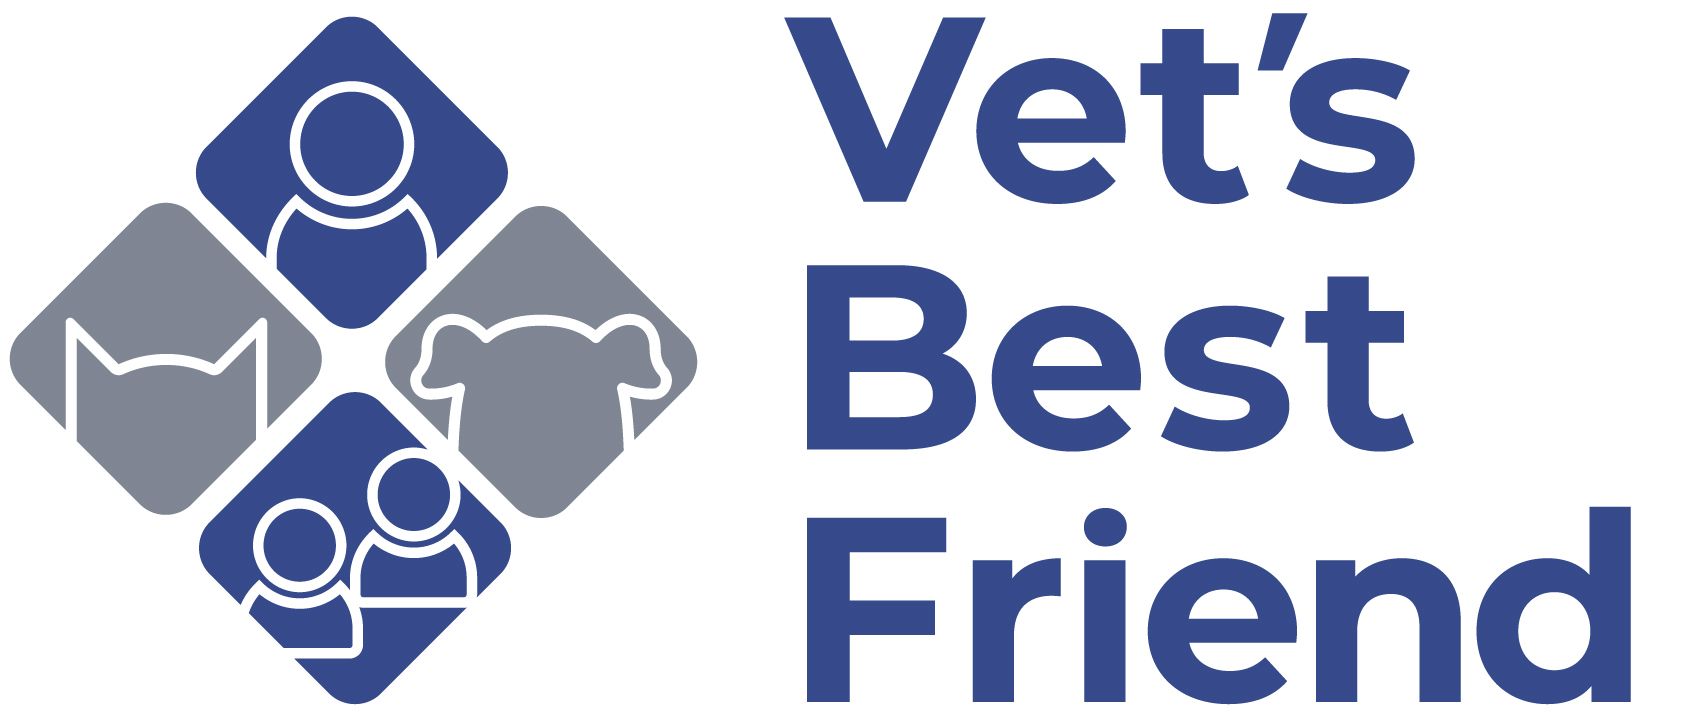 Vet's Best Friend